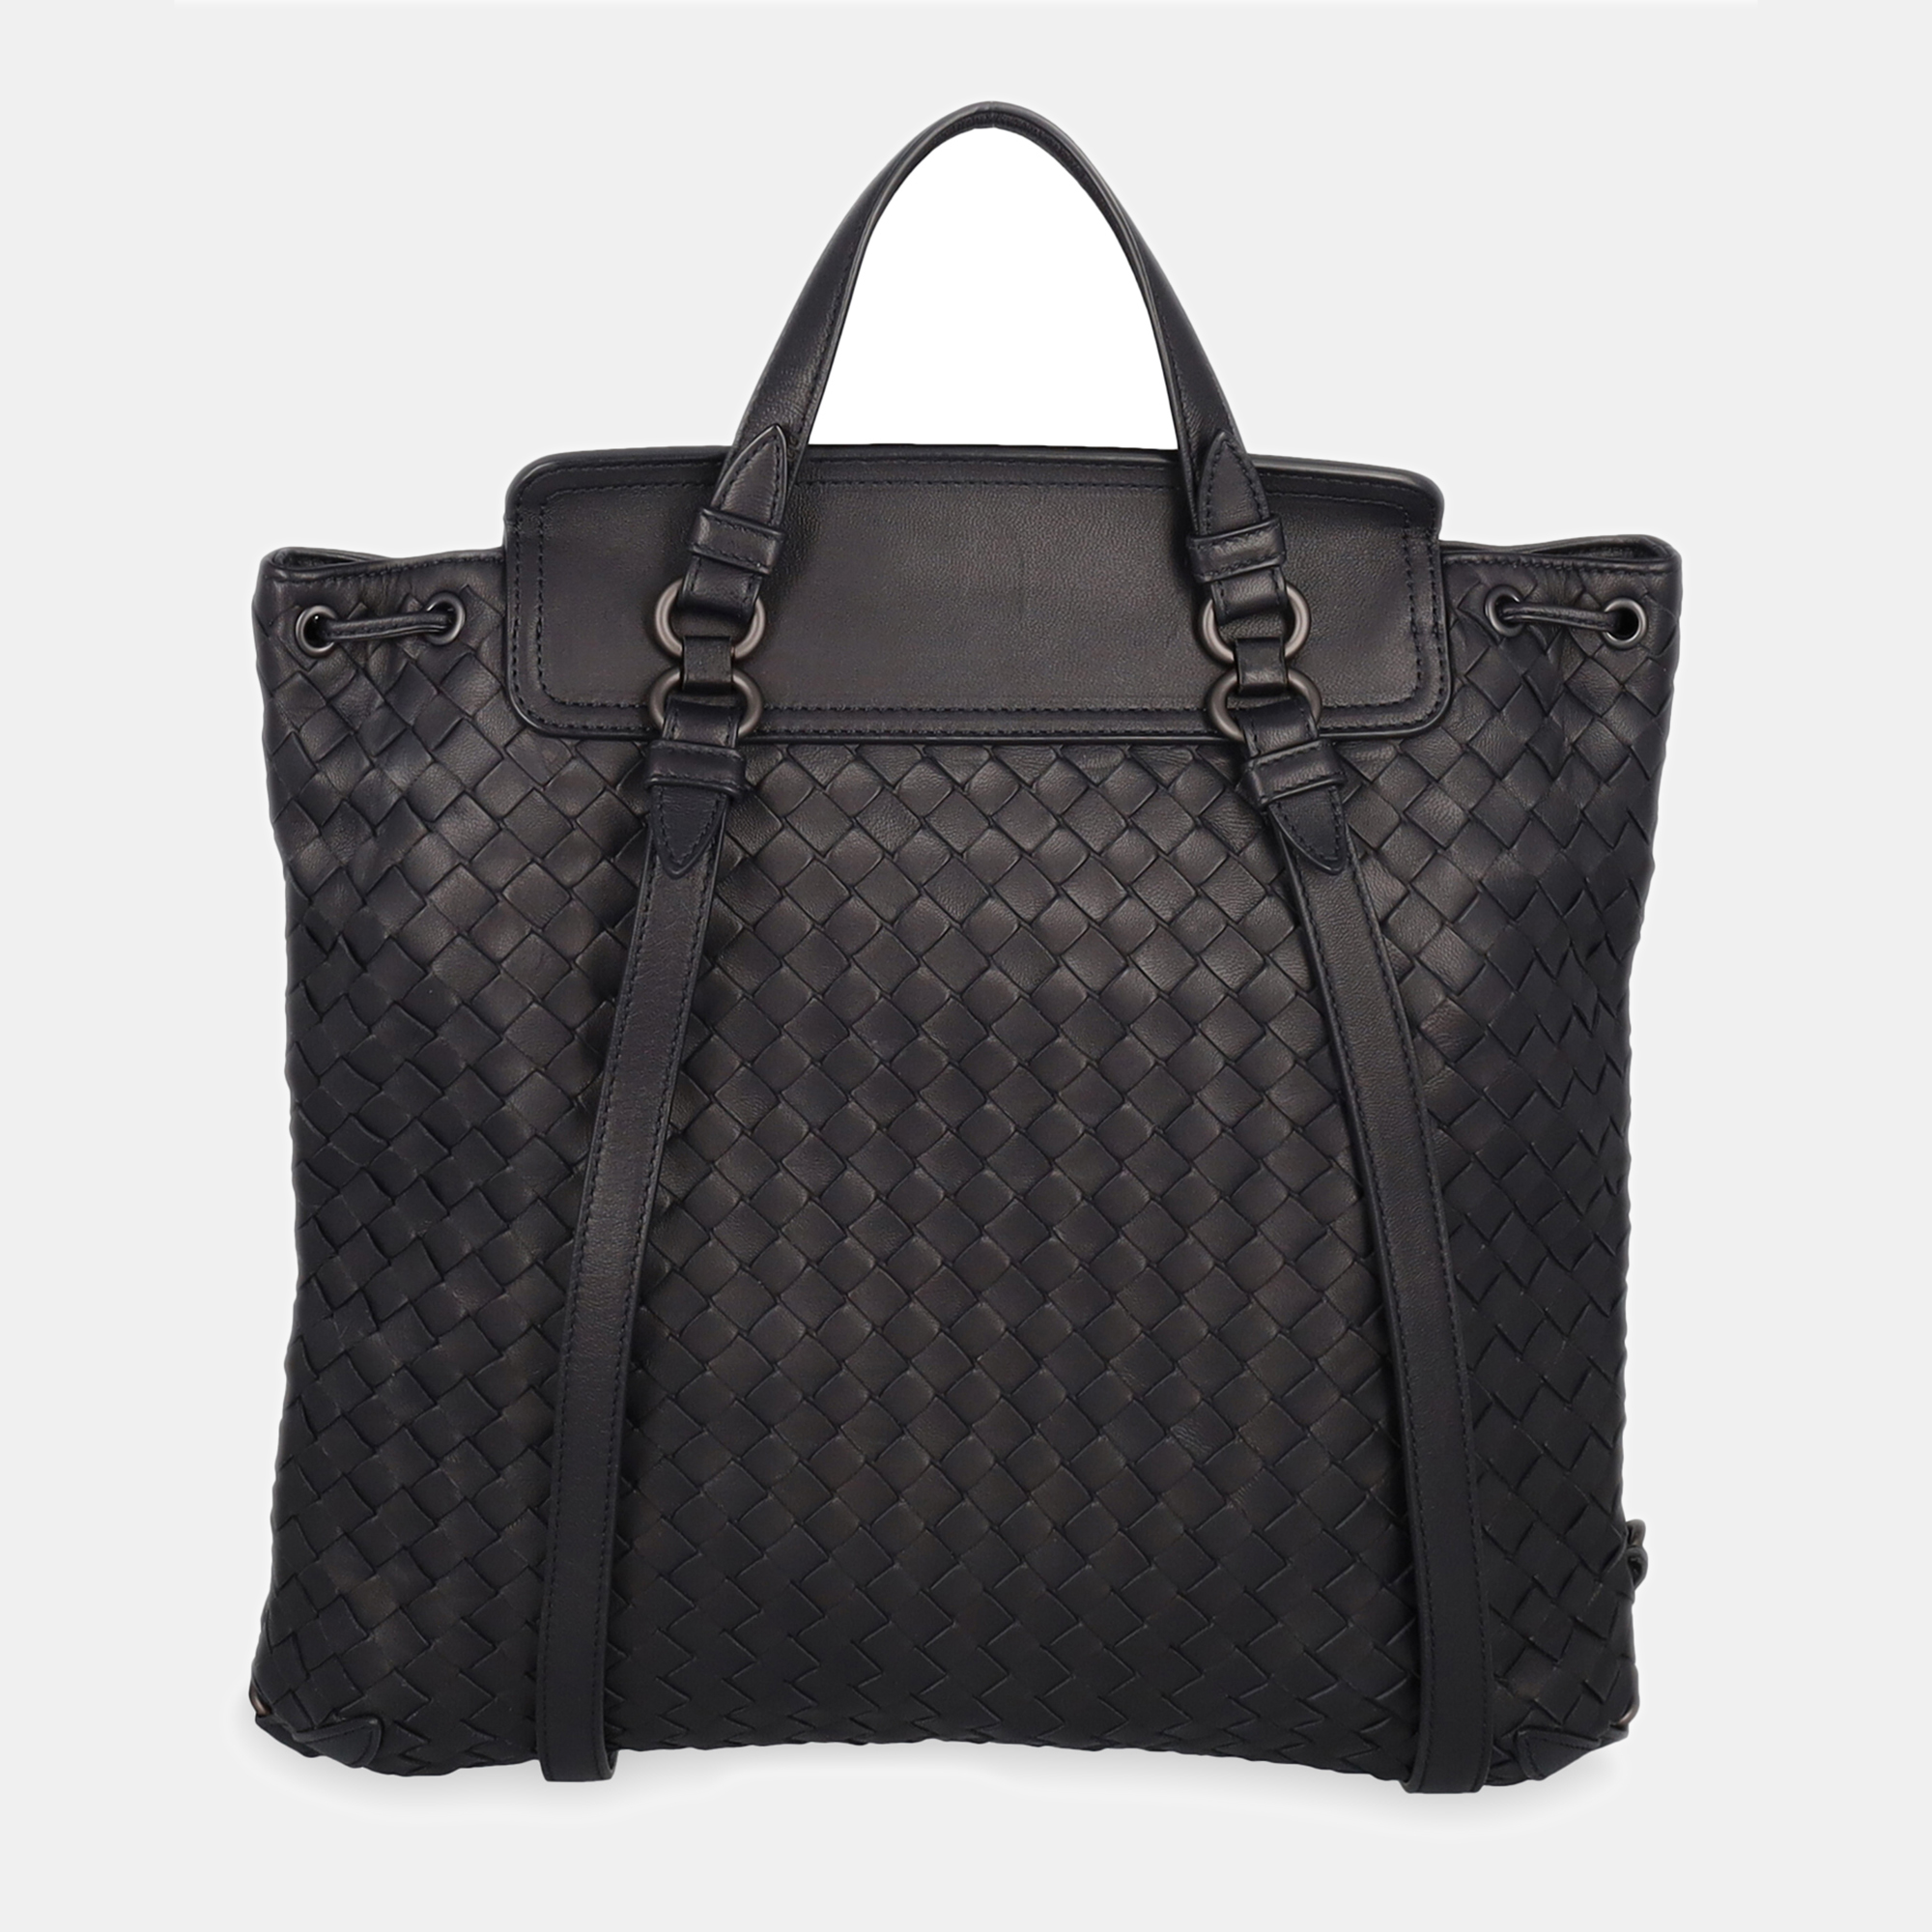 Bottega Veneta  Women's Leather Backpack - Black - One Size